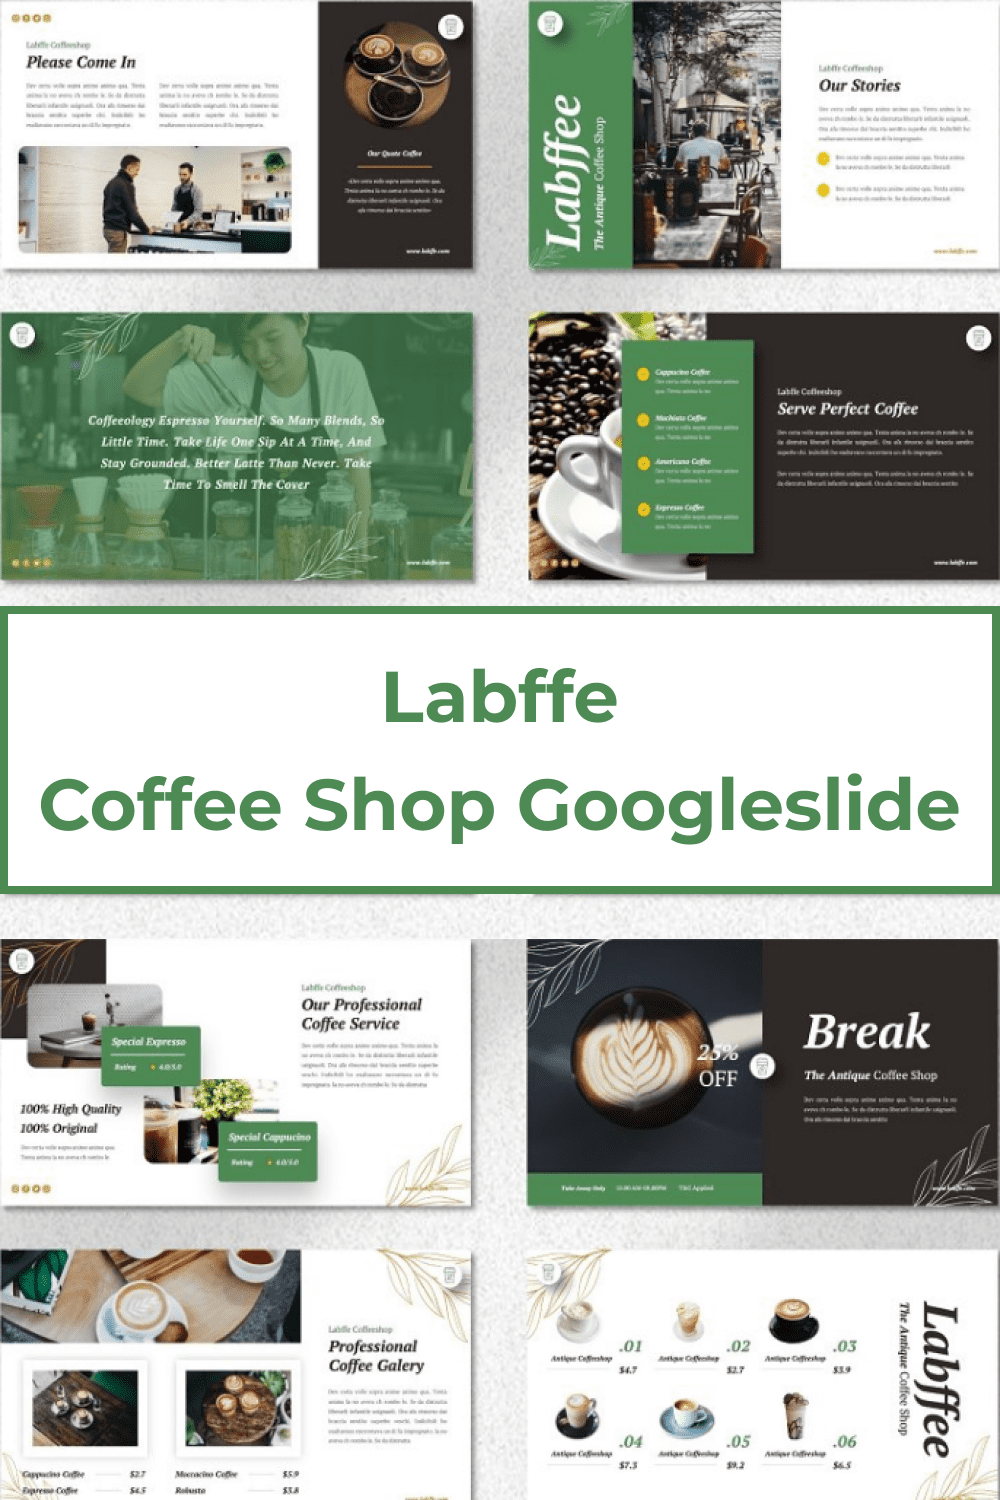 Labffe - Coffee Shop Googleslide cover image.